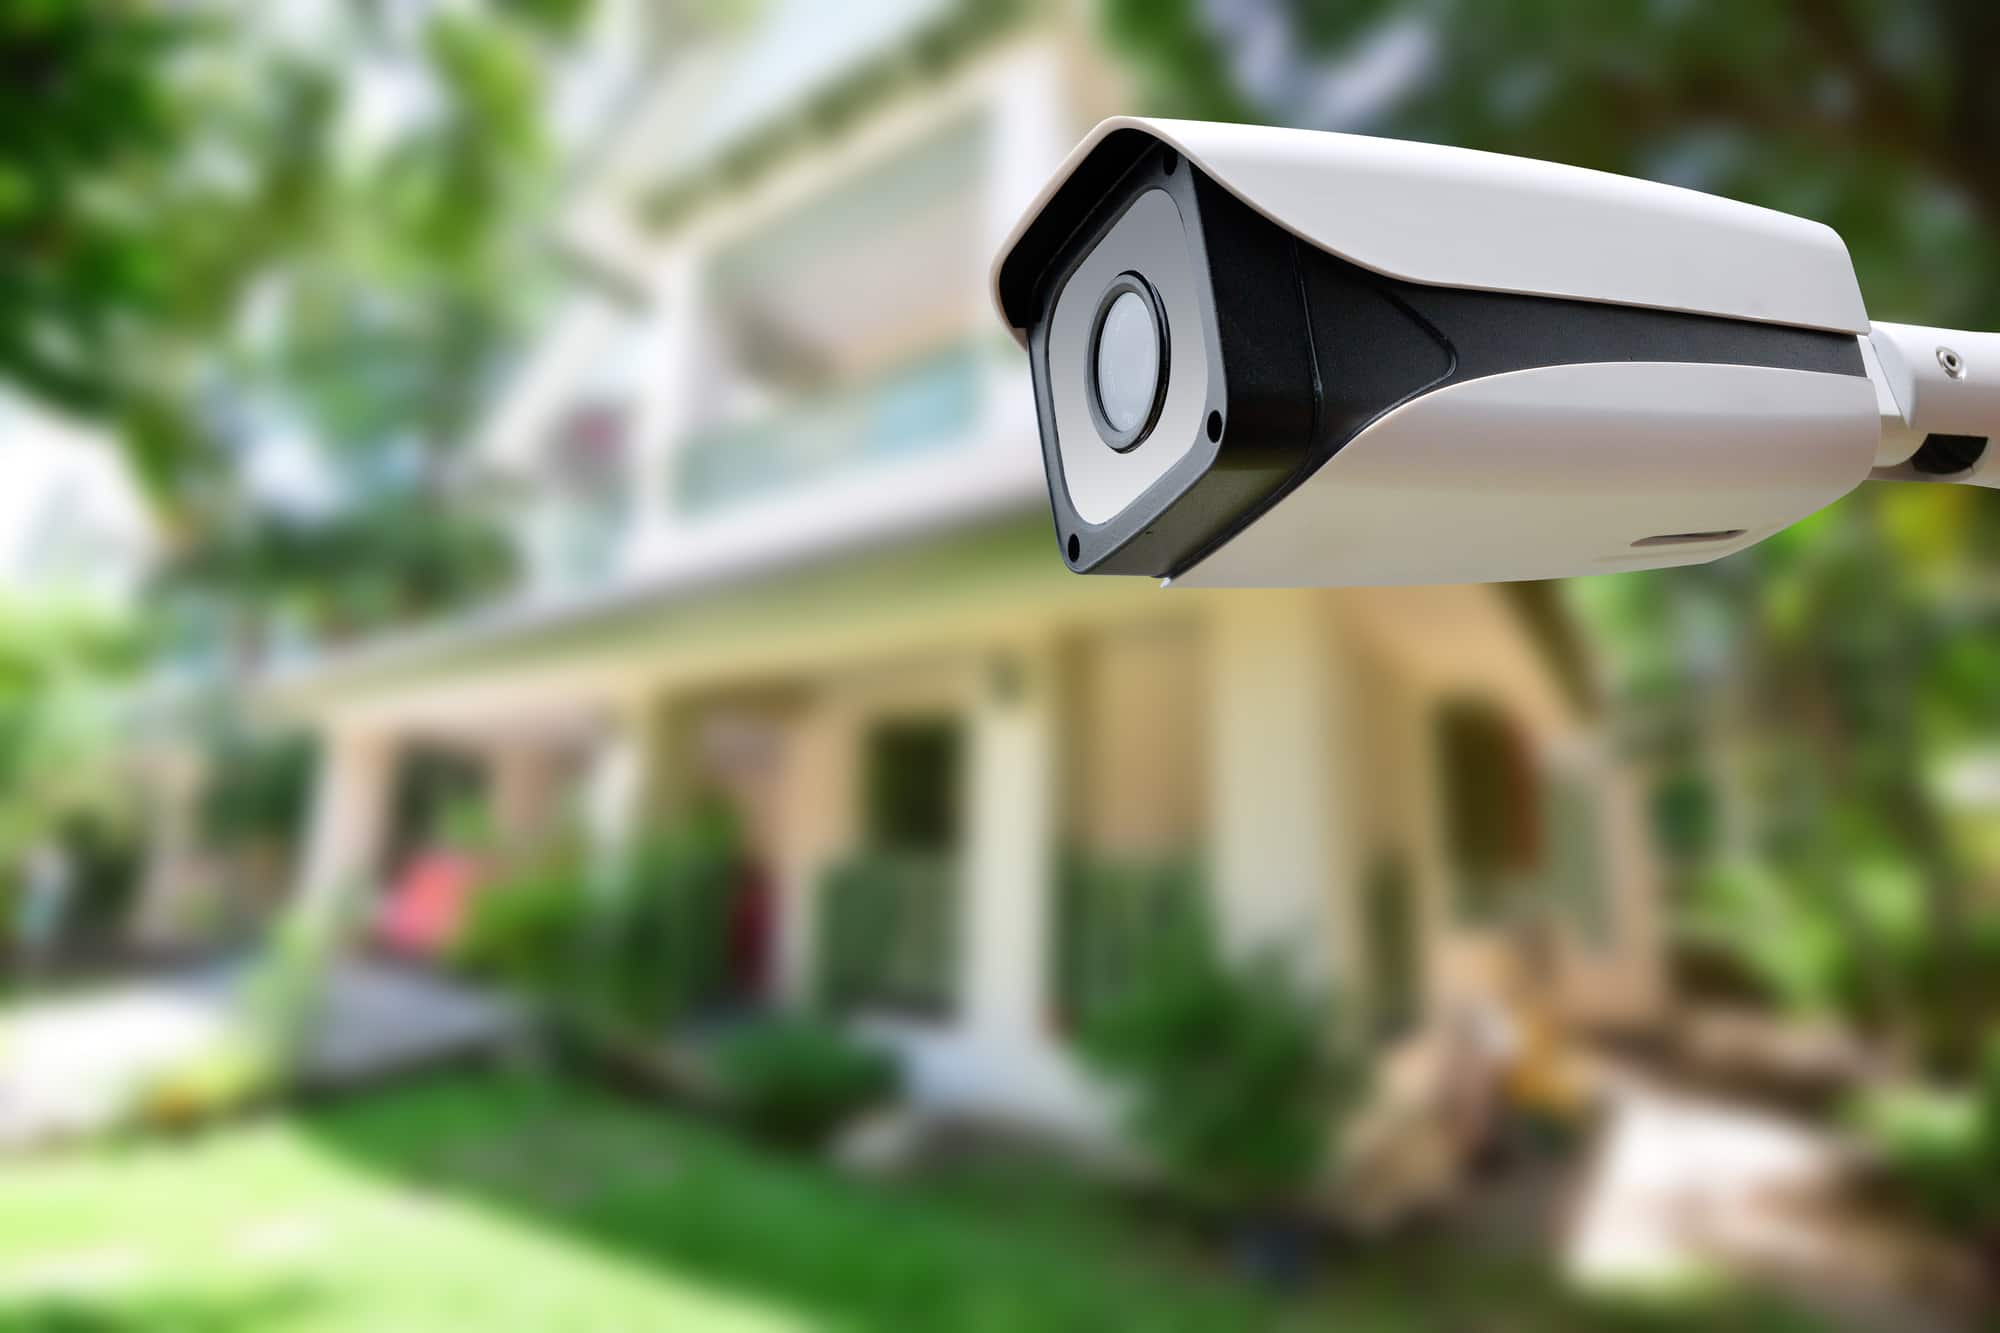 Caméra de surveillance extérieure